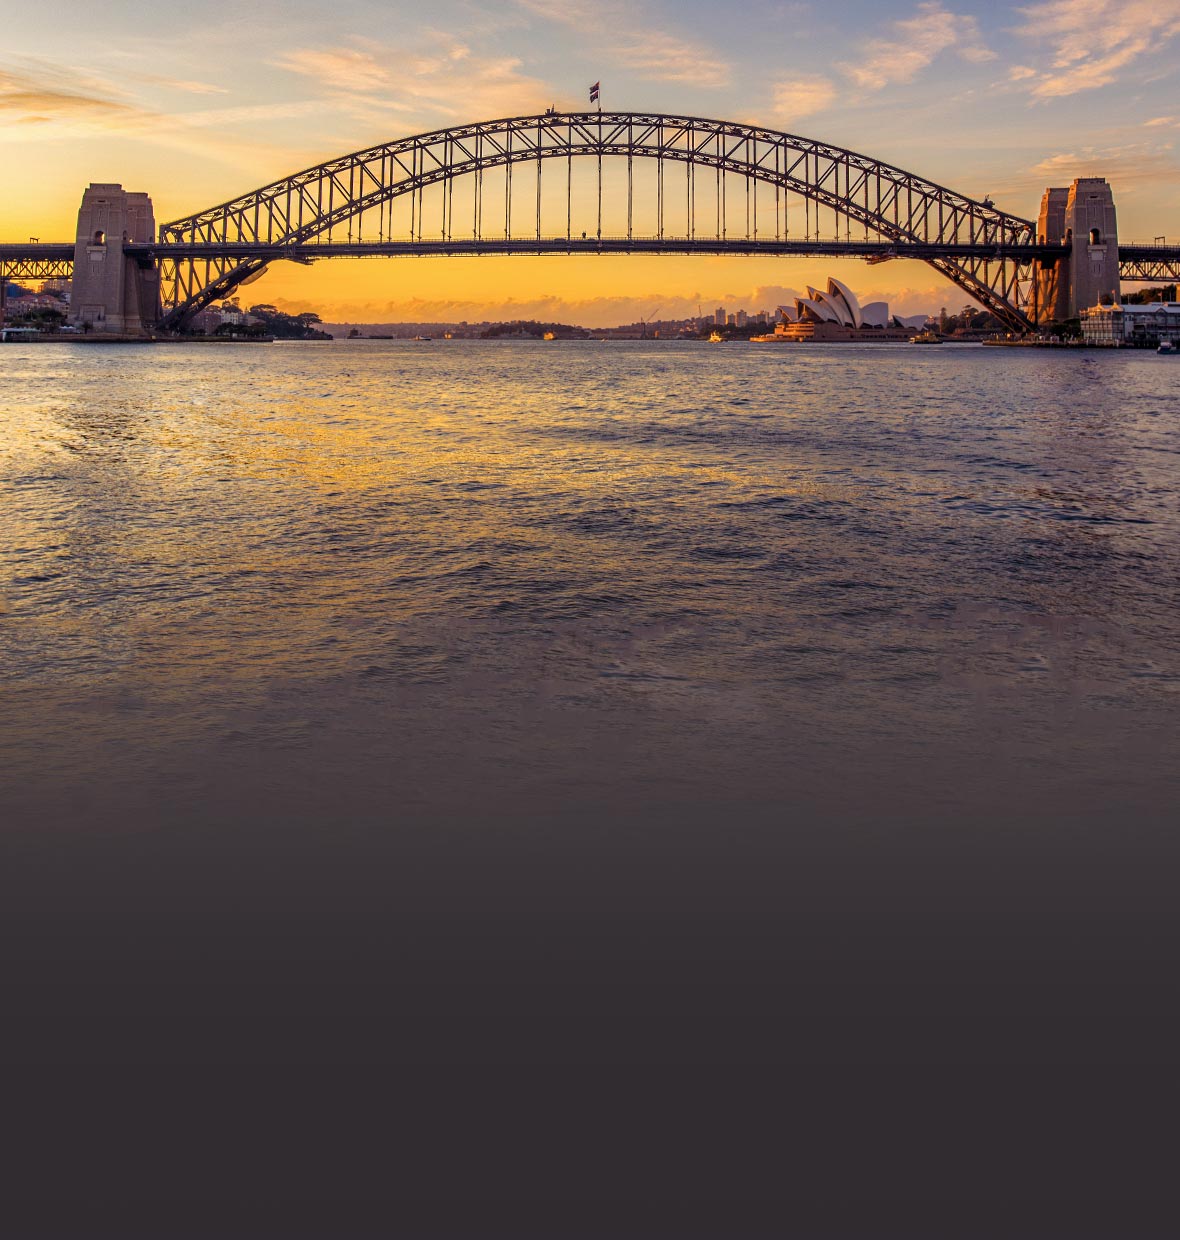 Sydney's iconic Harbour Bridge and the Opera House